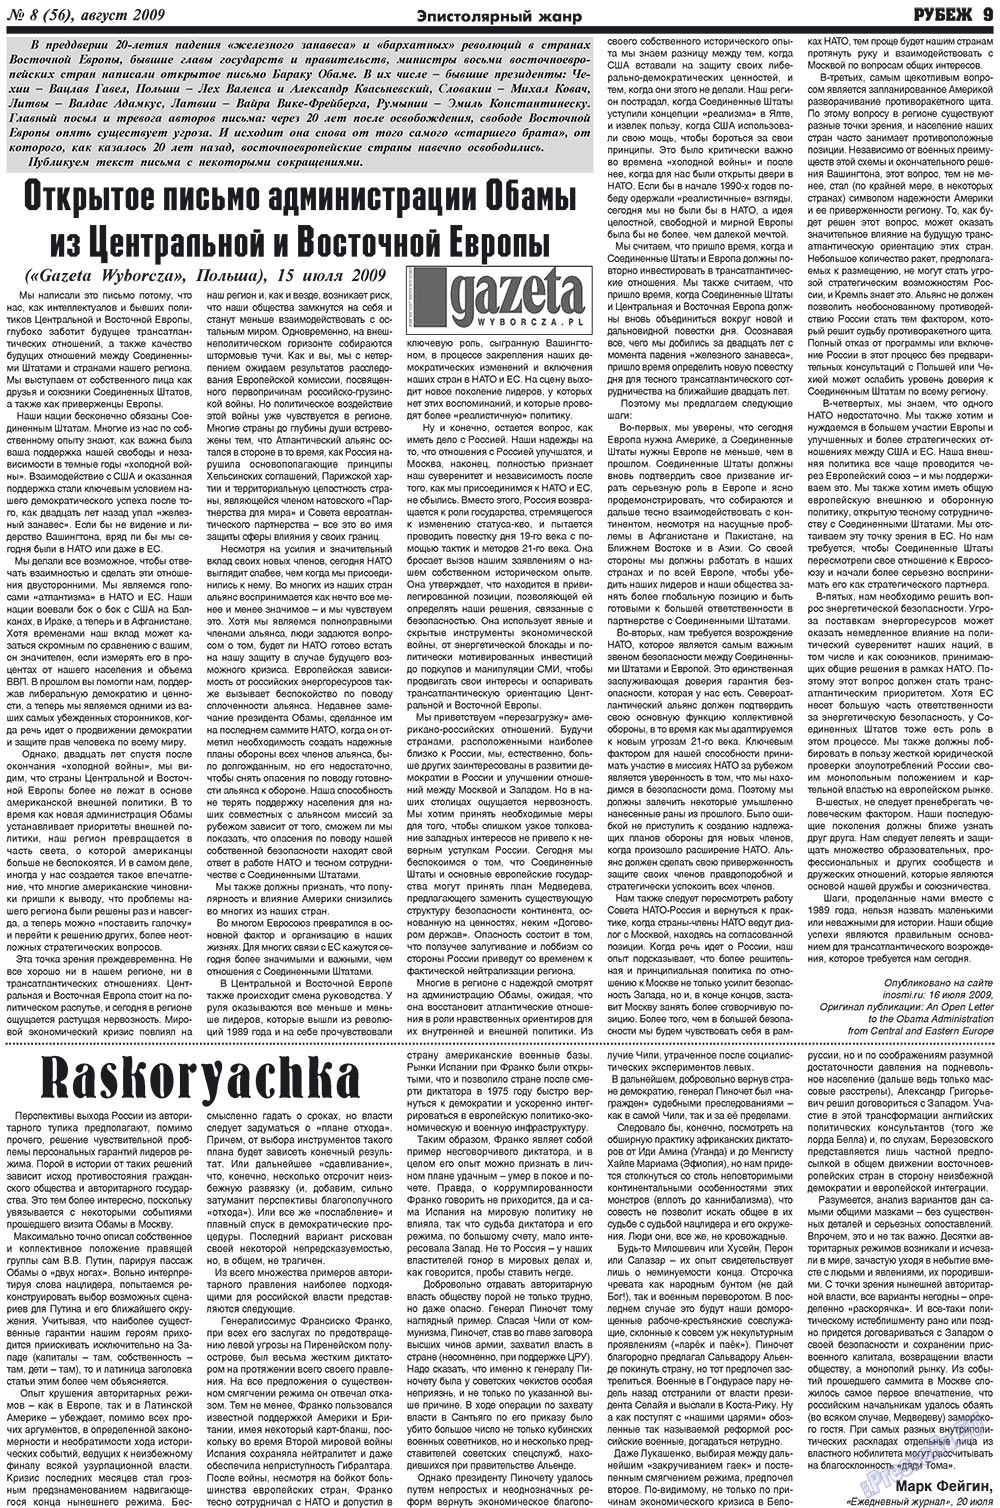 Рубеж, газета. 2009 №8 стр.9